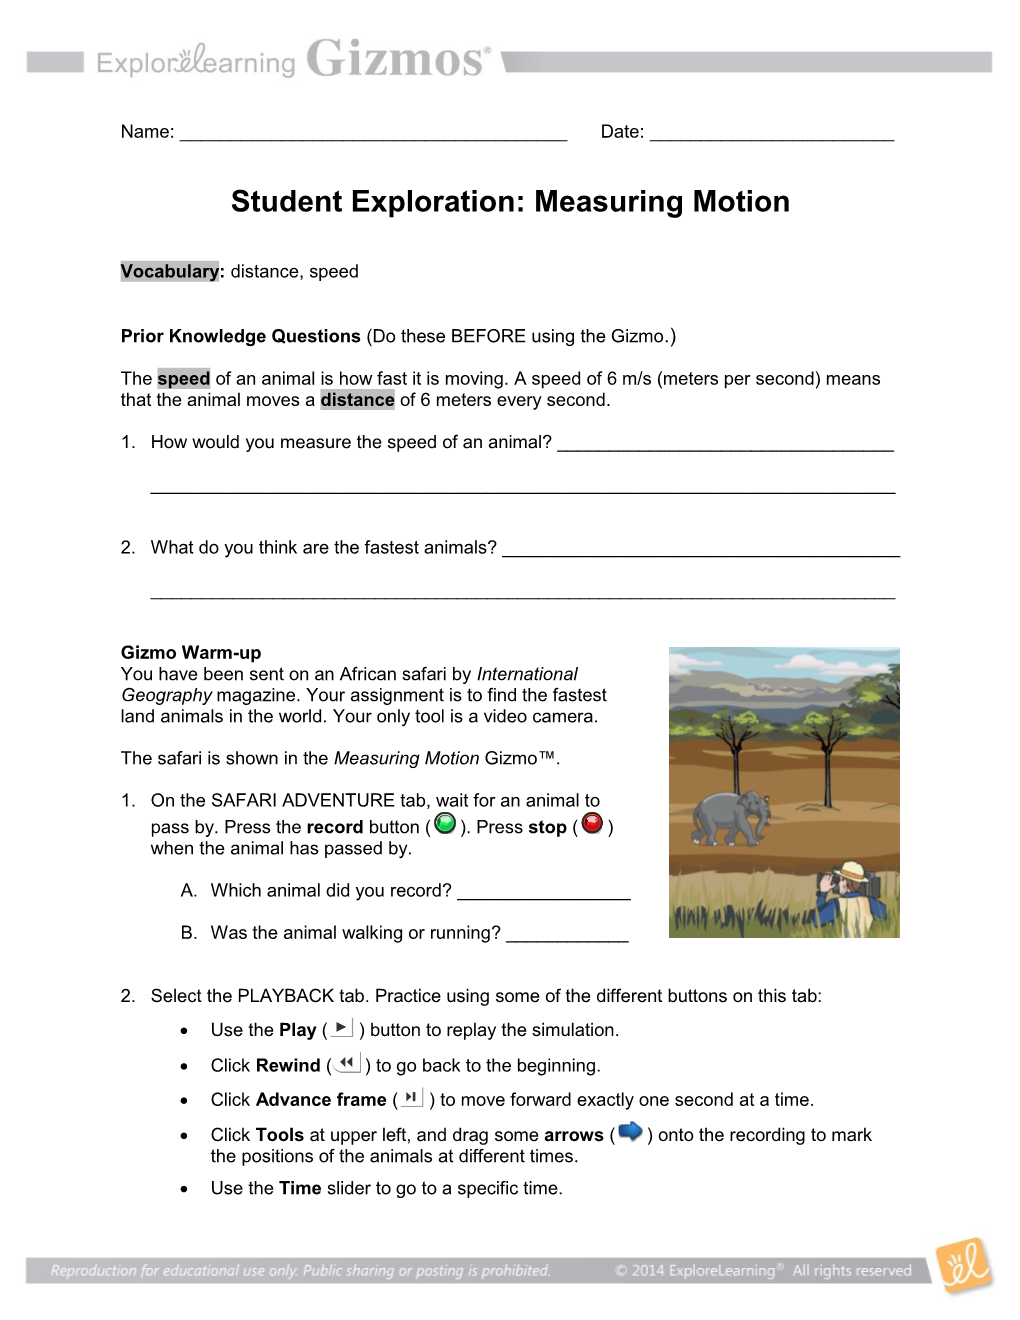 Student Exploration: Measuring Motion